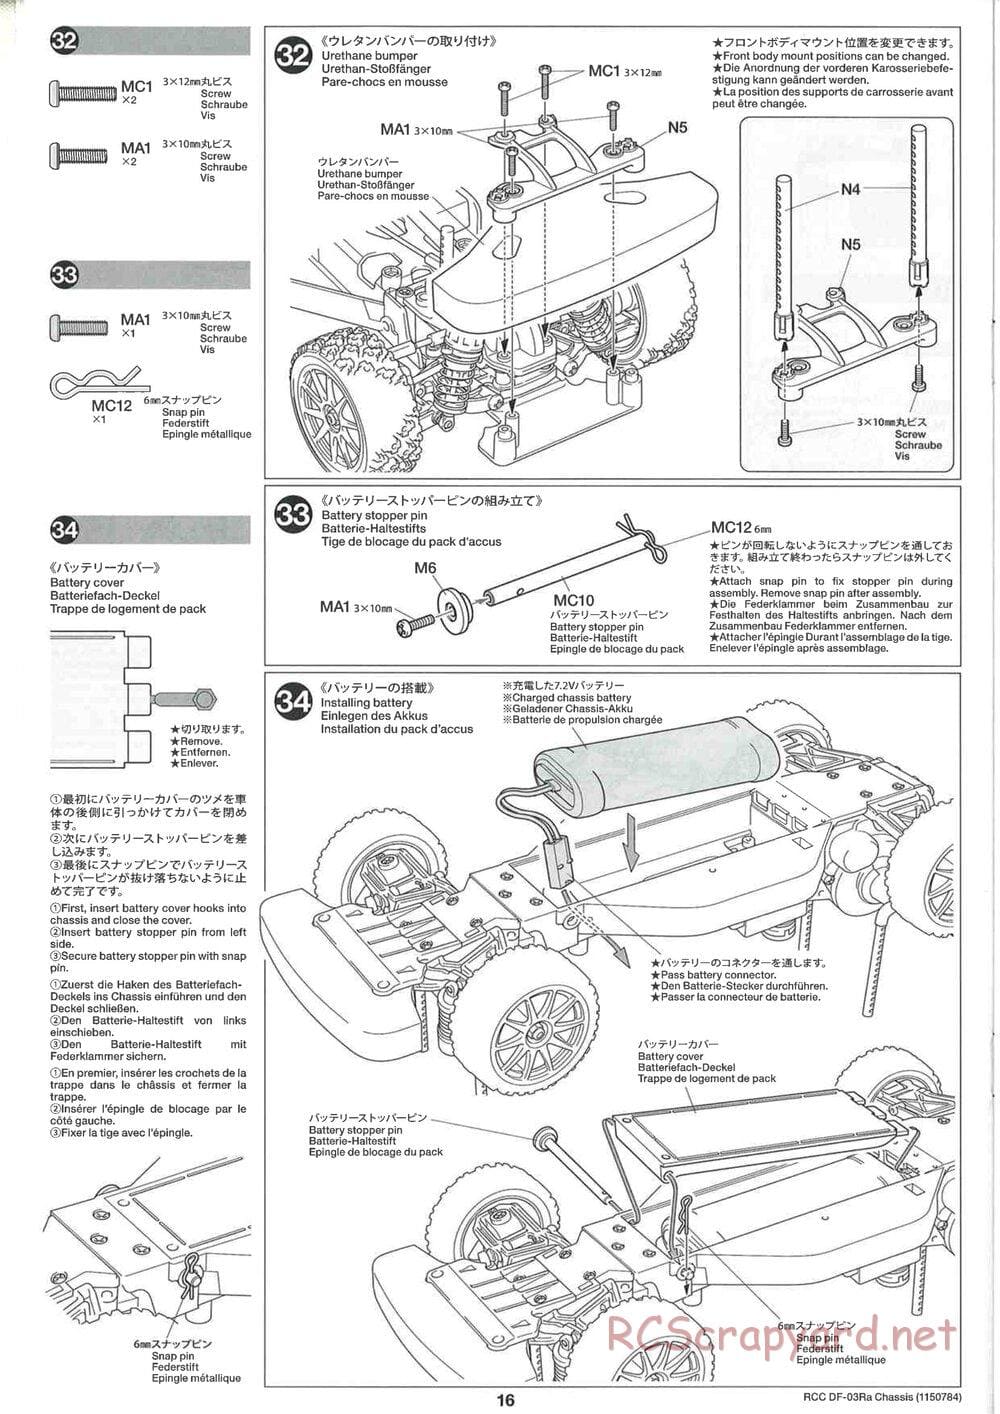 Tamiya - DF-03Ra Chassis - Manual - Page 16